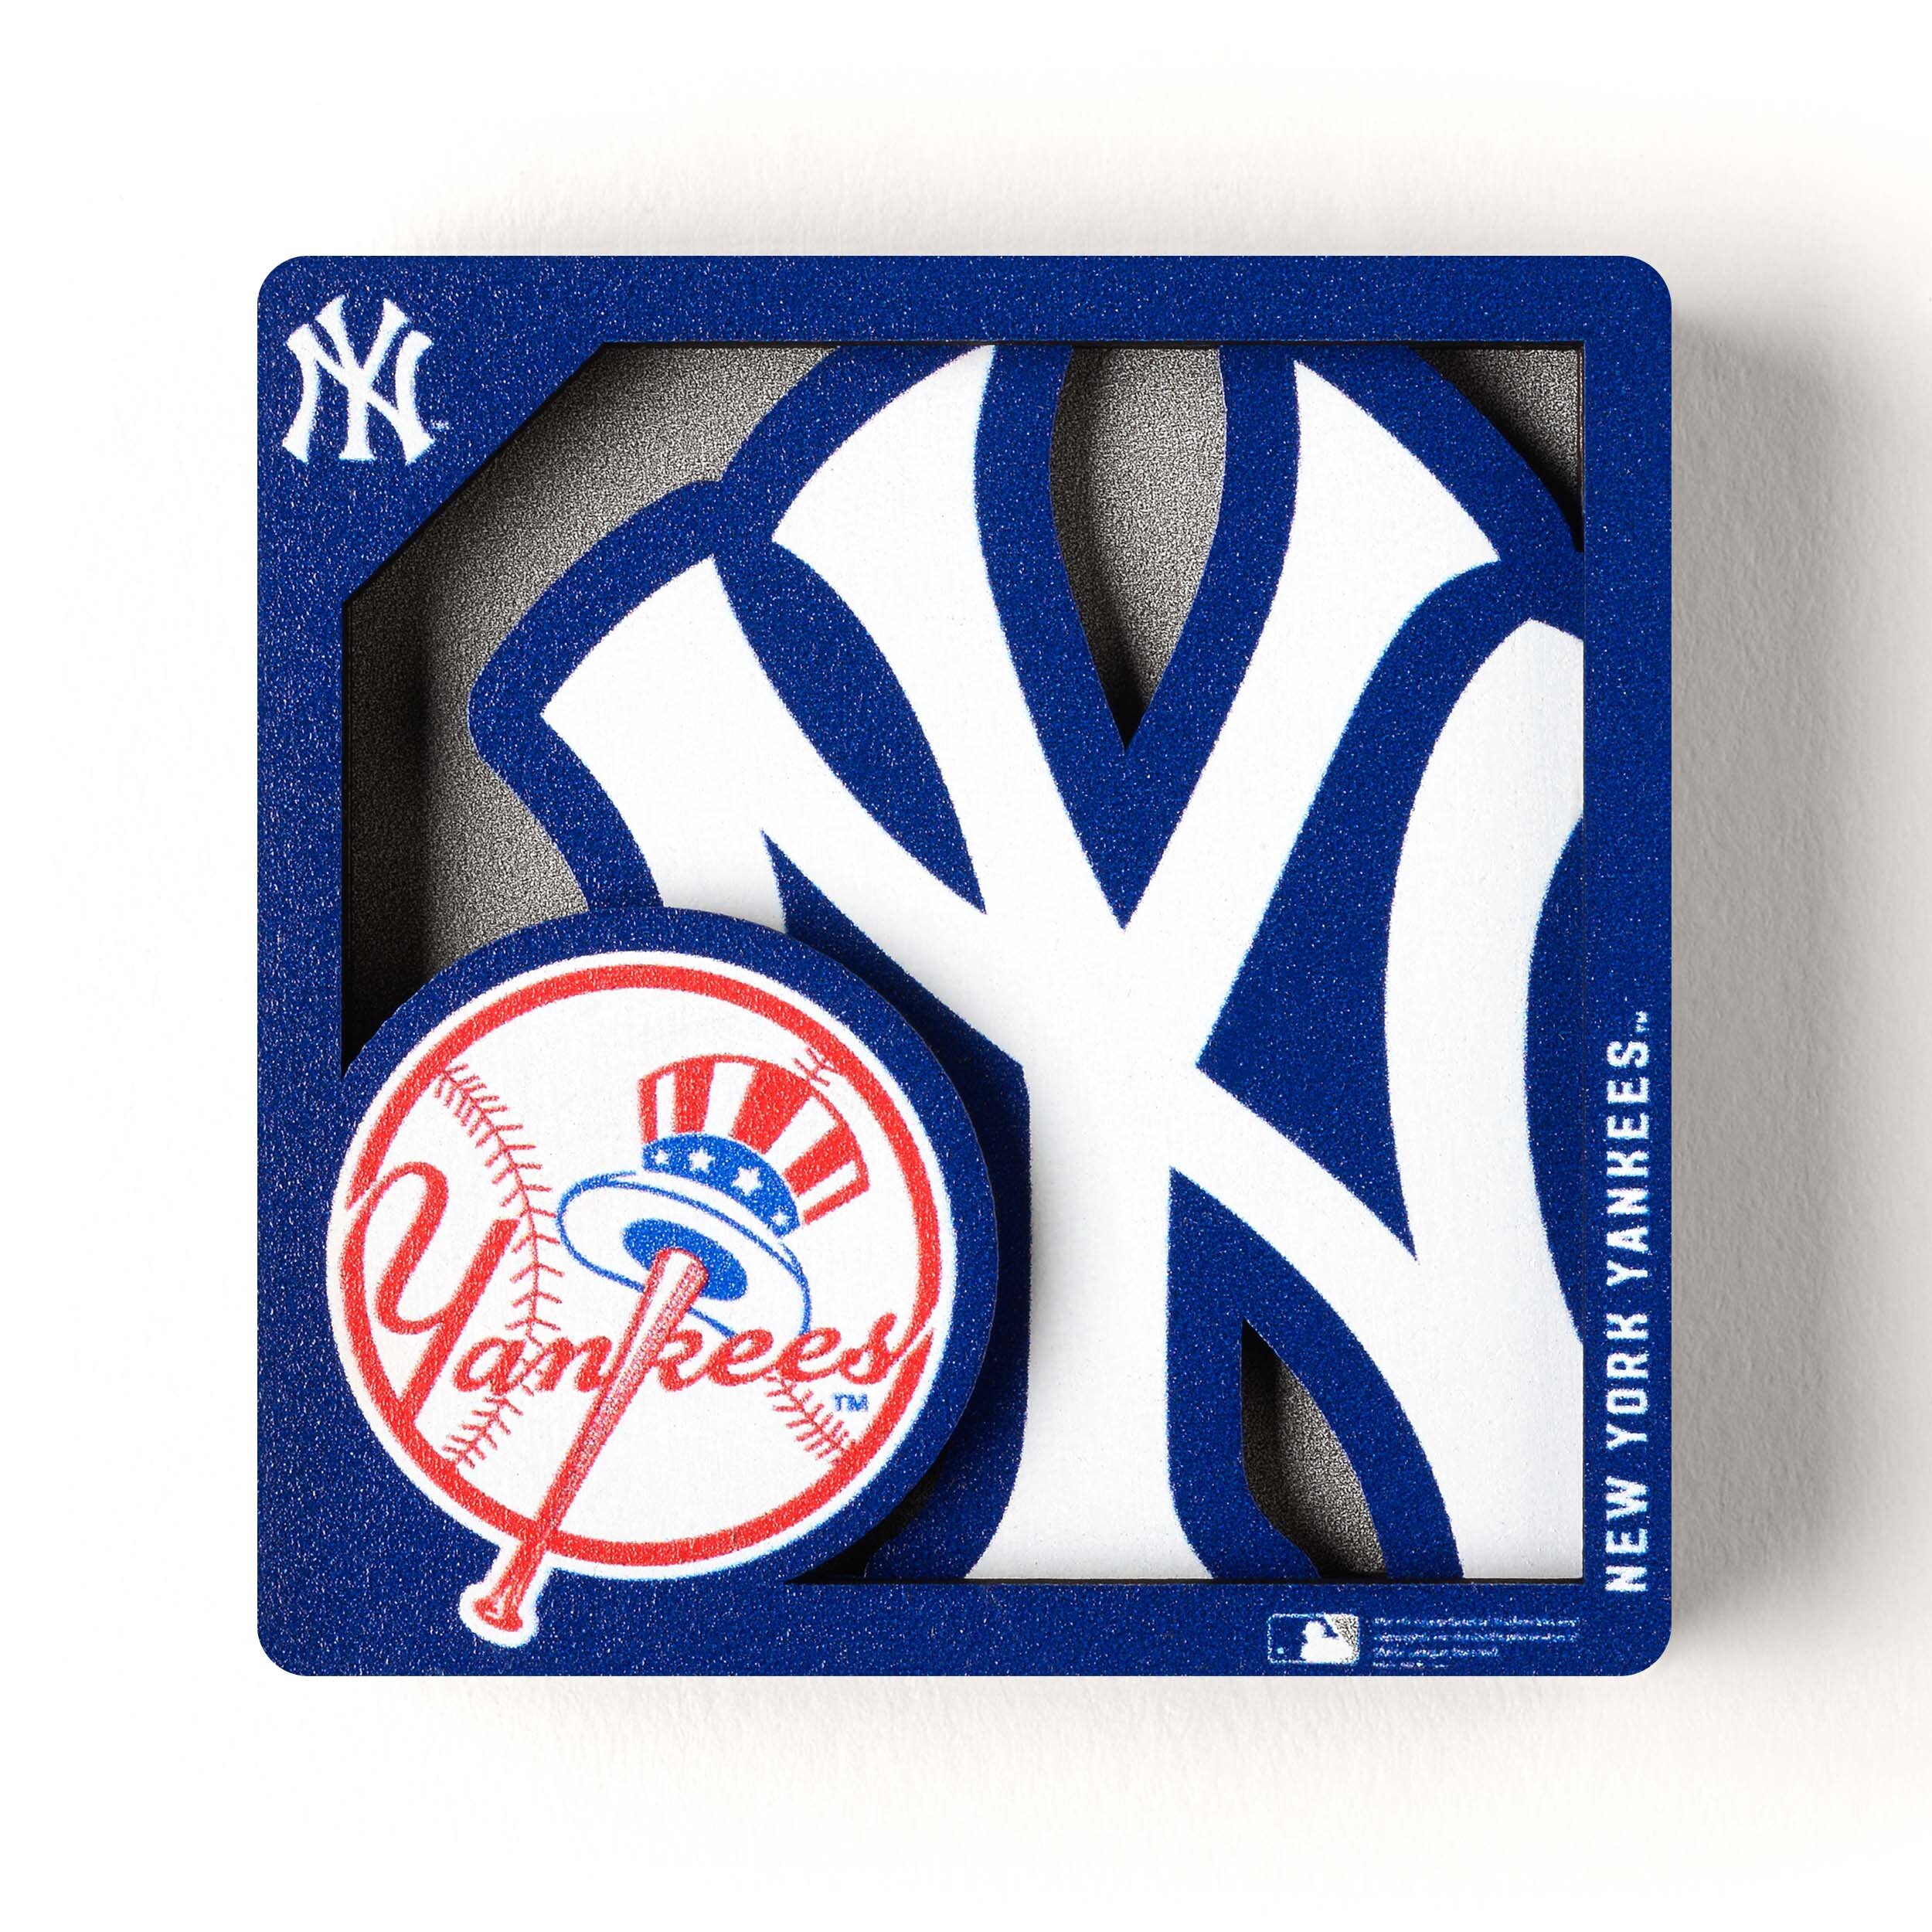 New York Yankees X Liquid Blue 